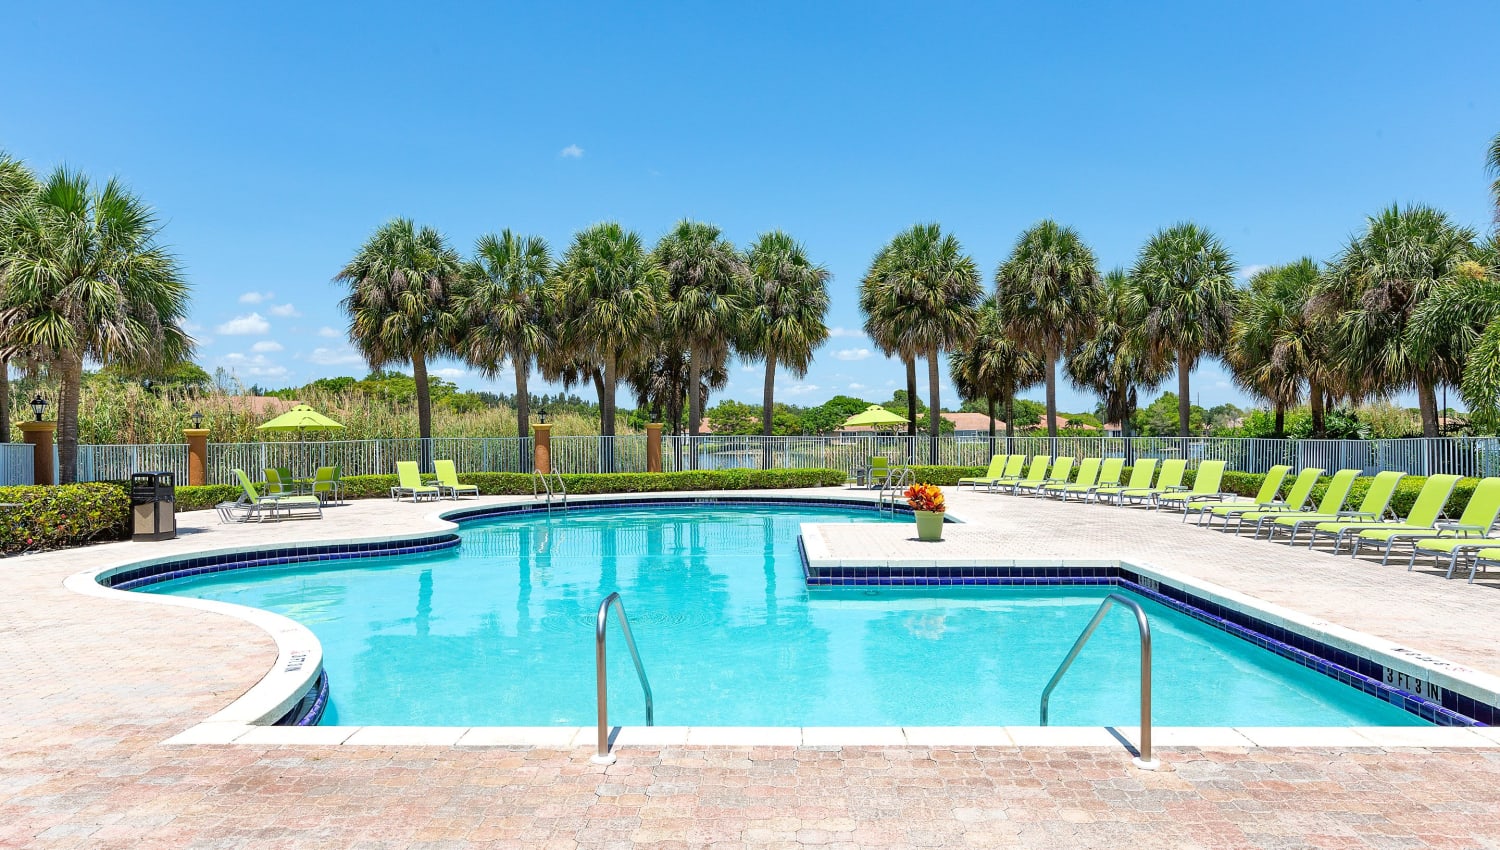 Pool at Whalers Cove Apartments in Boynton Beach, Florida